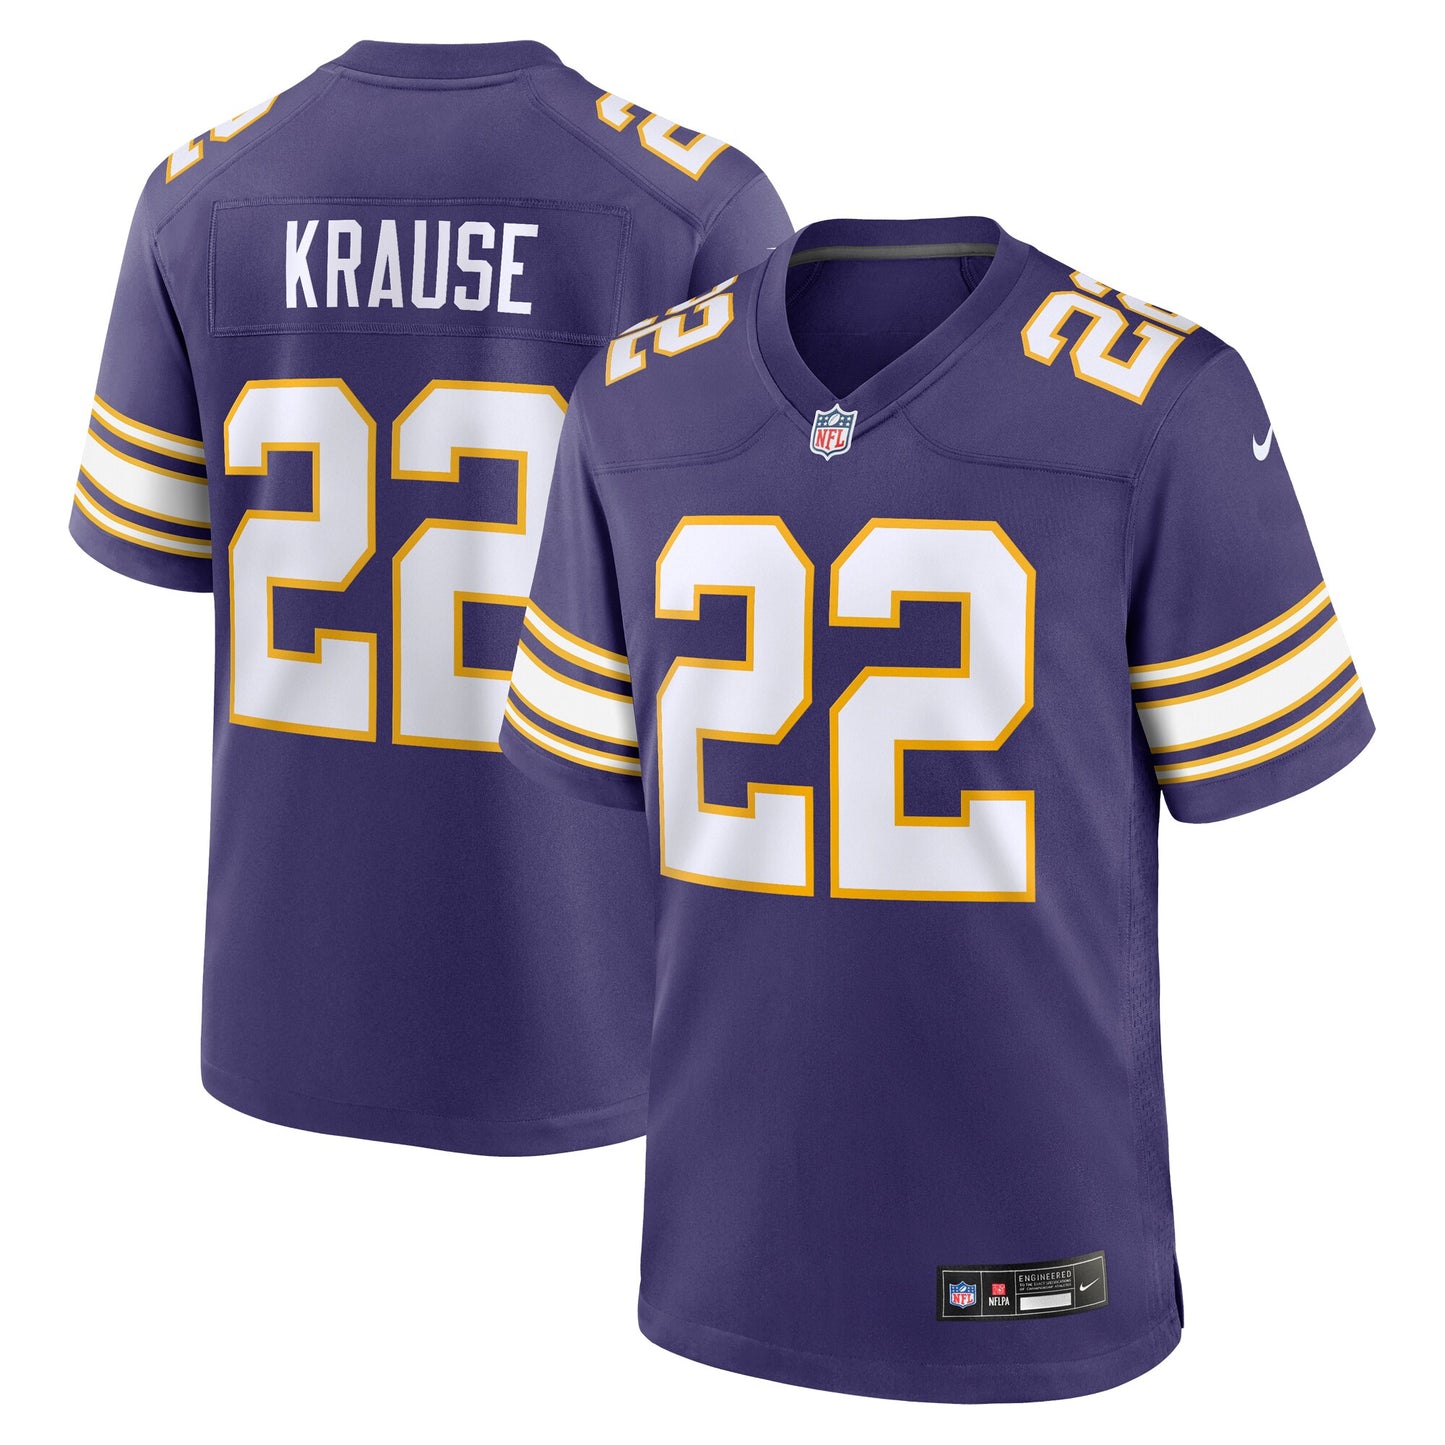 Paul Krause Minnesota Vikings Nike Classic Retired Player Jersey - Purple